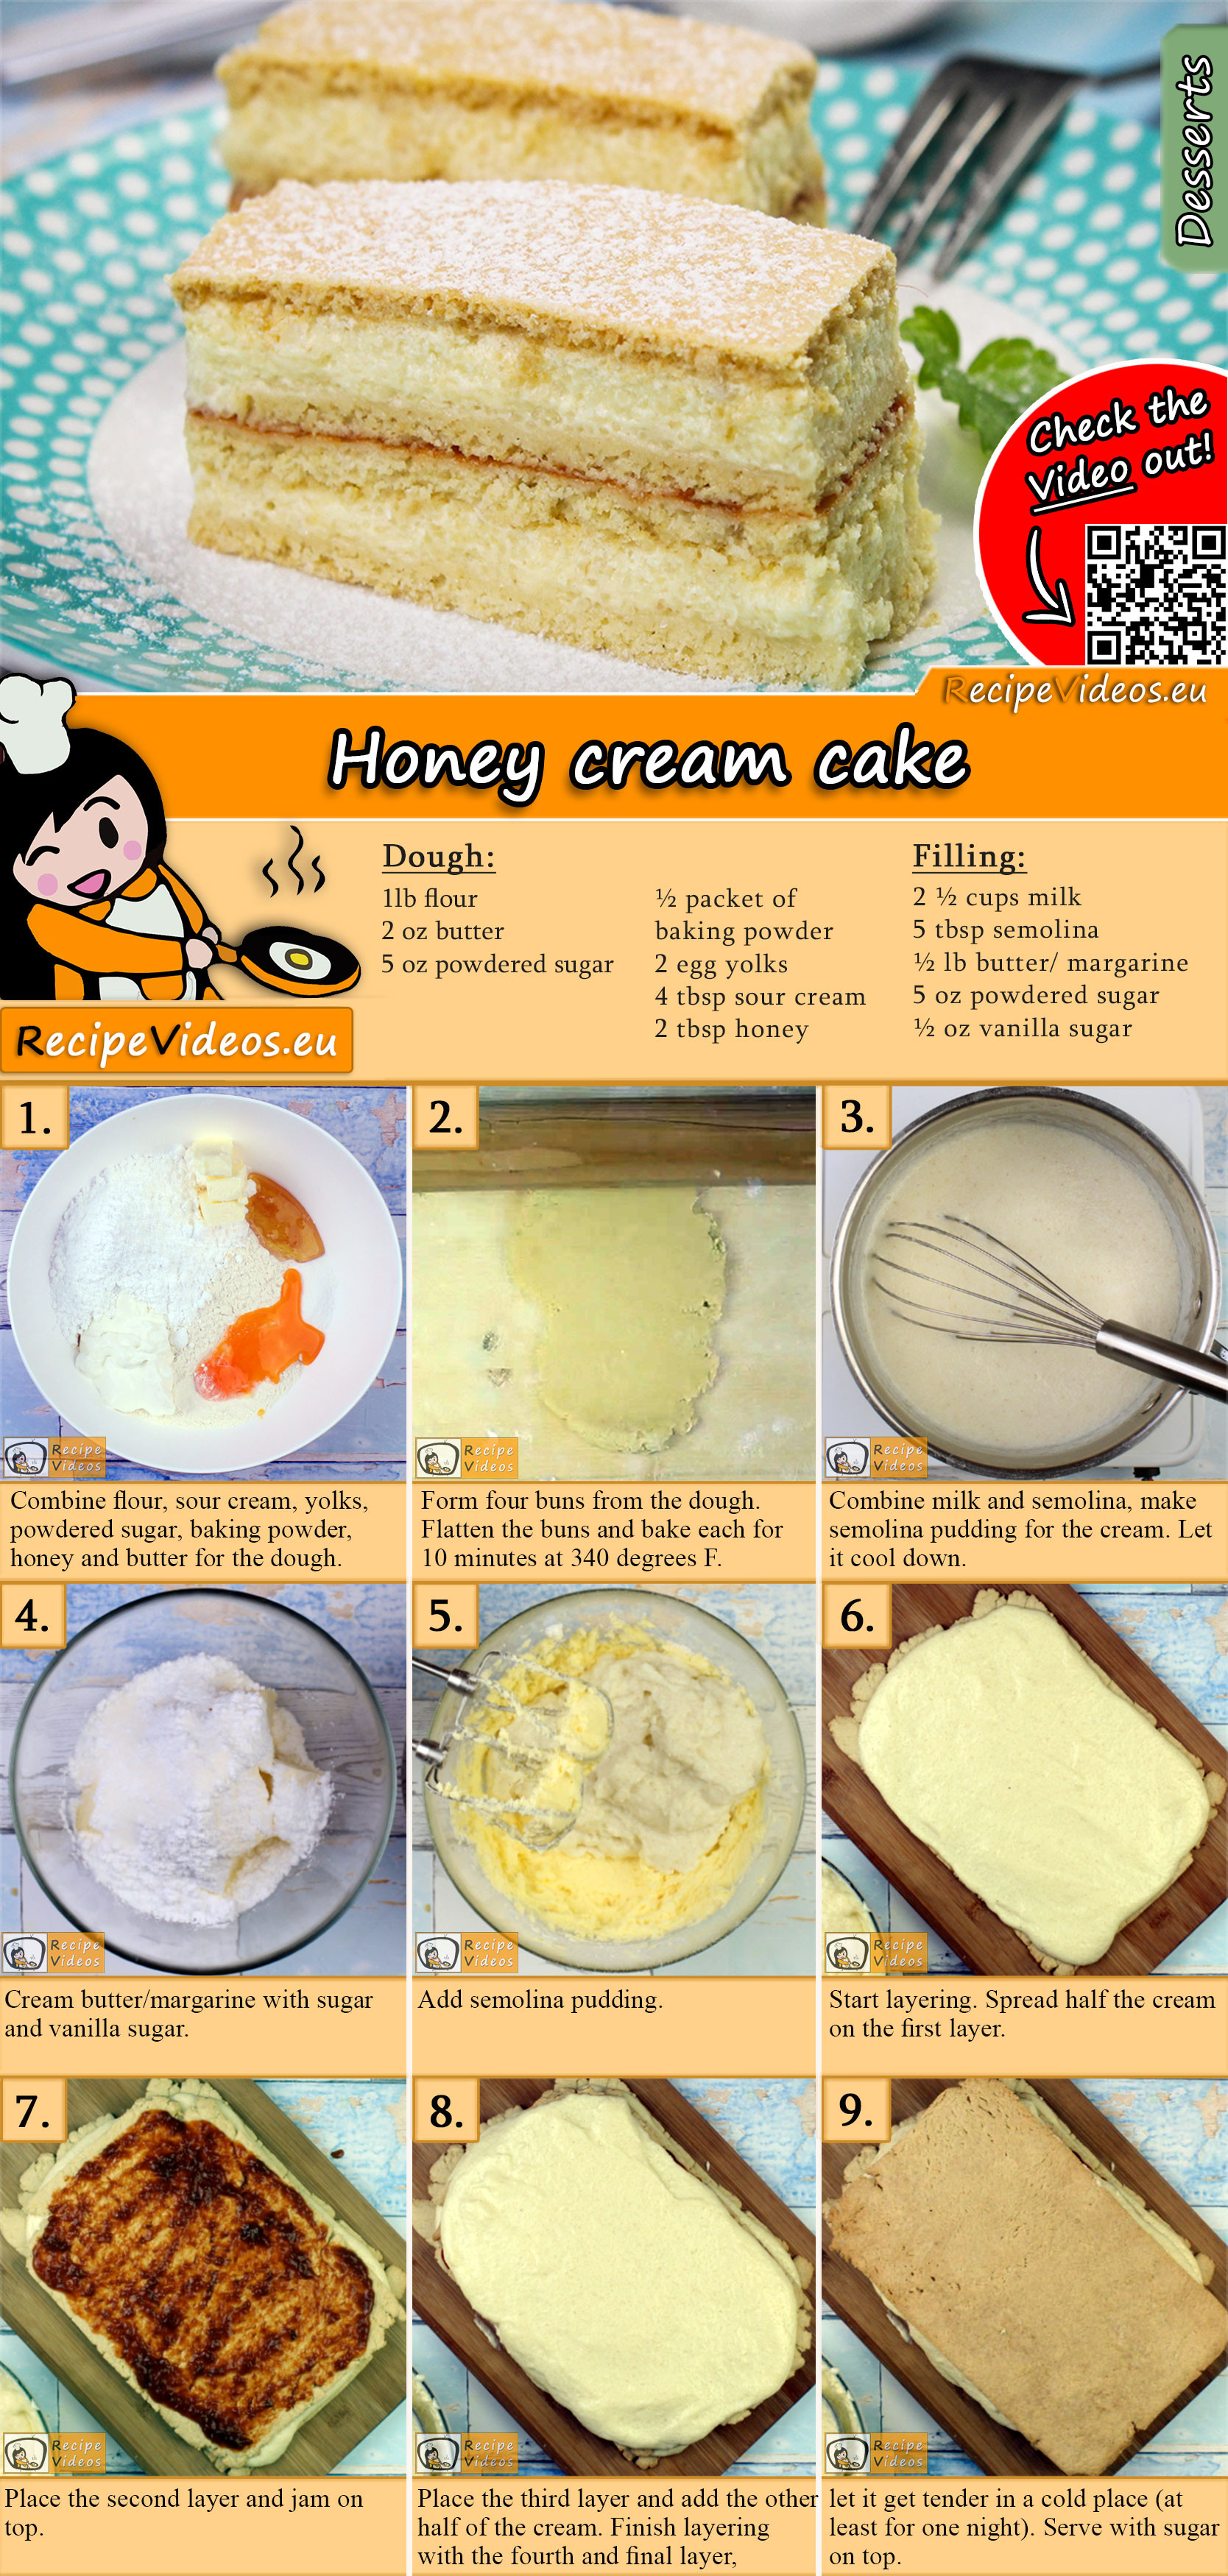 Honey cream cake recipe with video